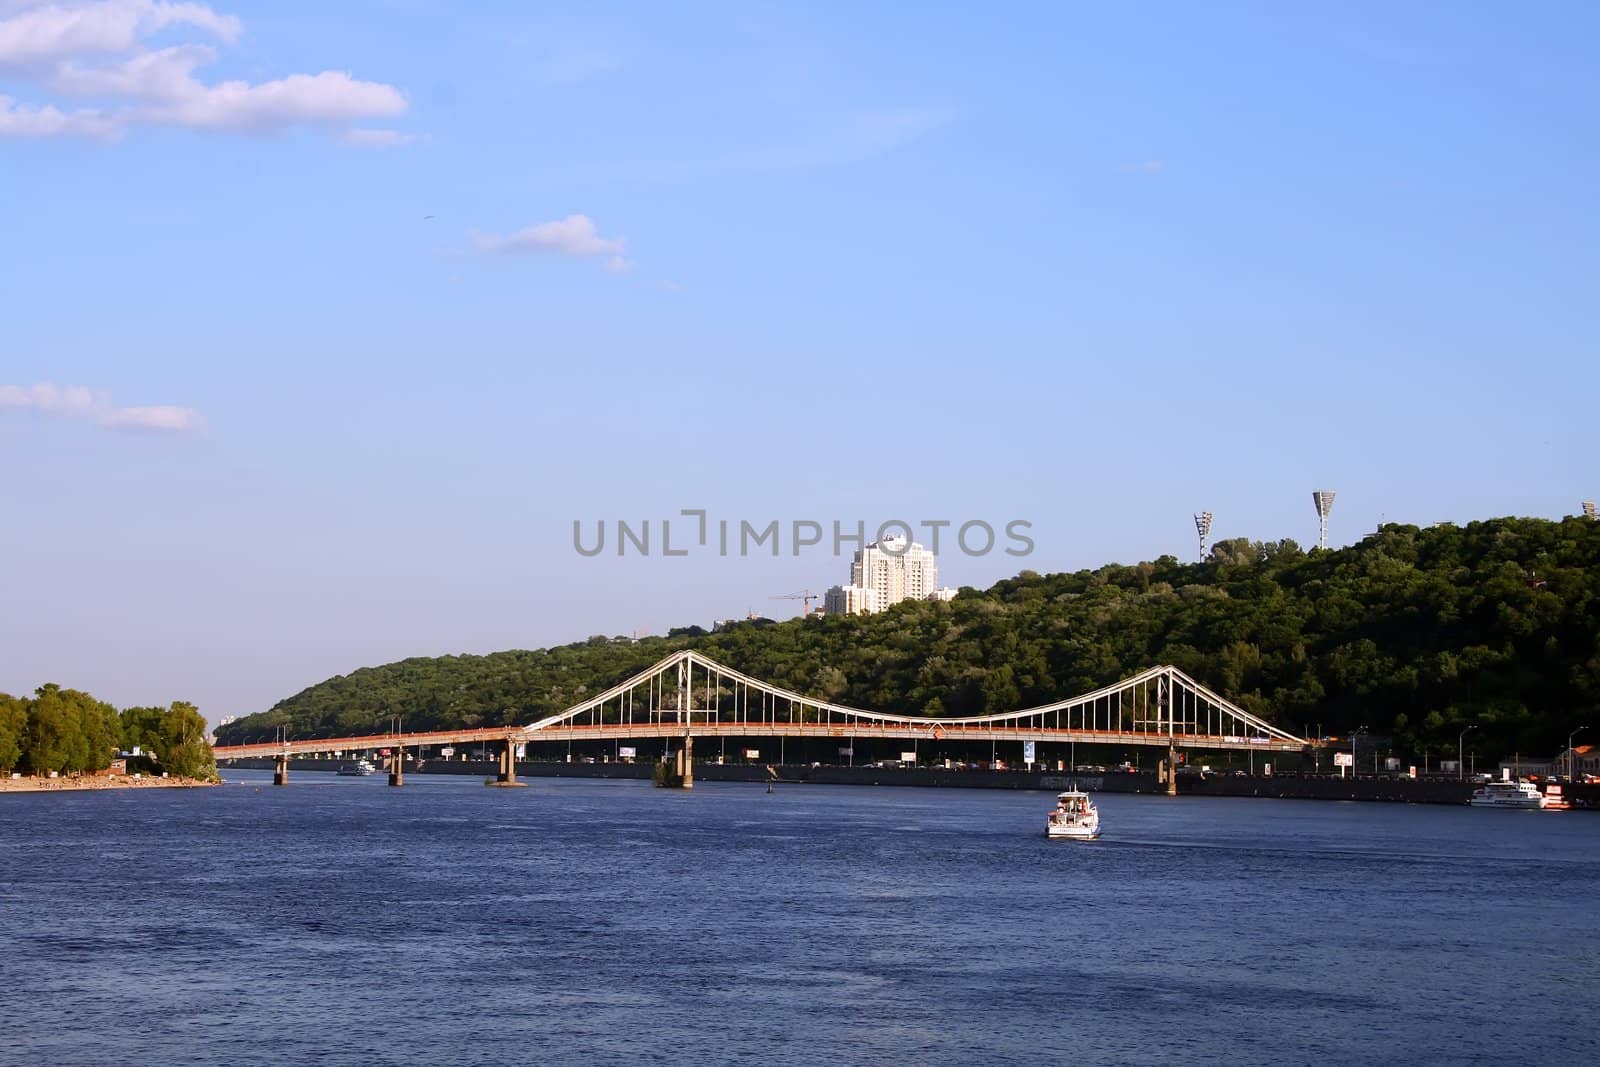 footbridge on Dnepr river. Cityscape in Kiev, Ukraine. 